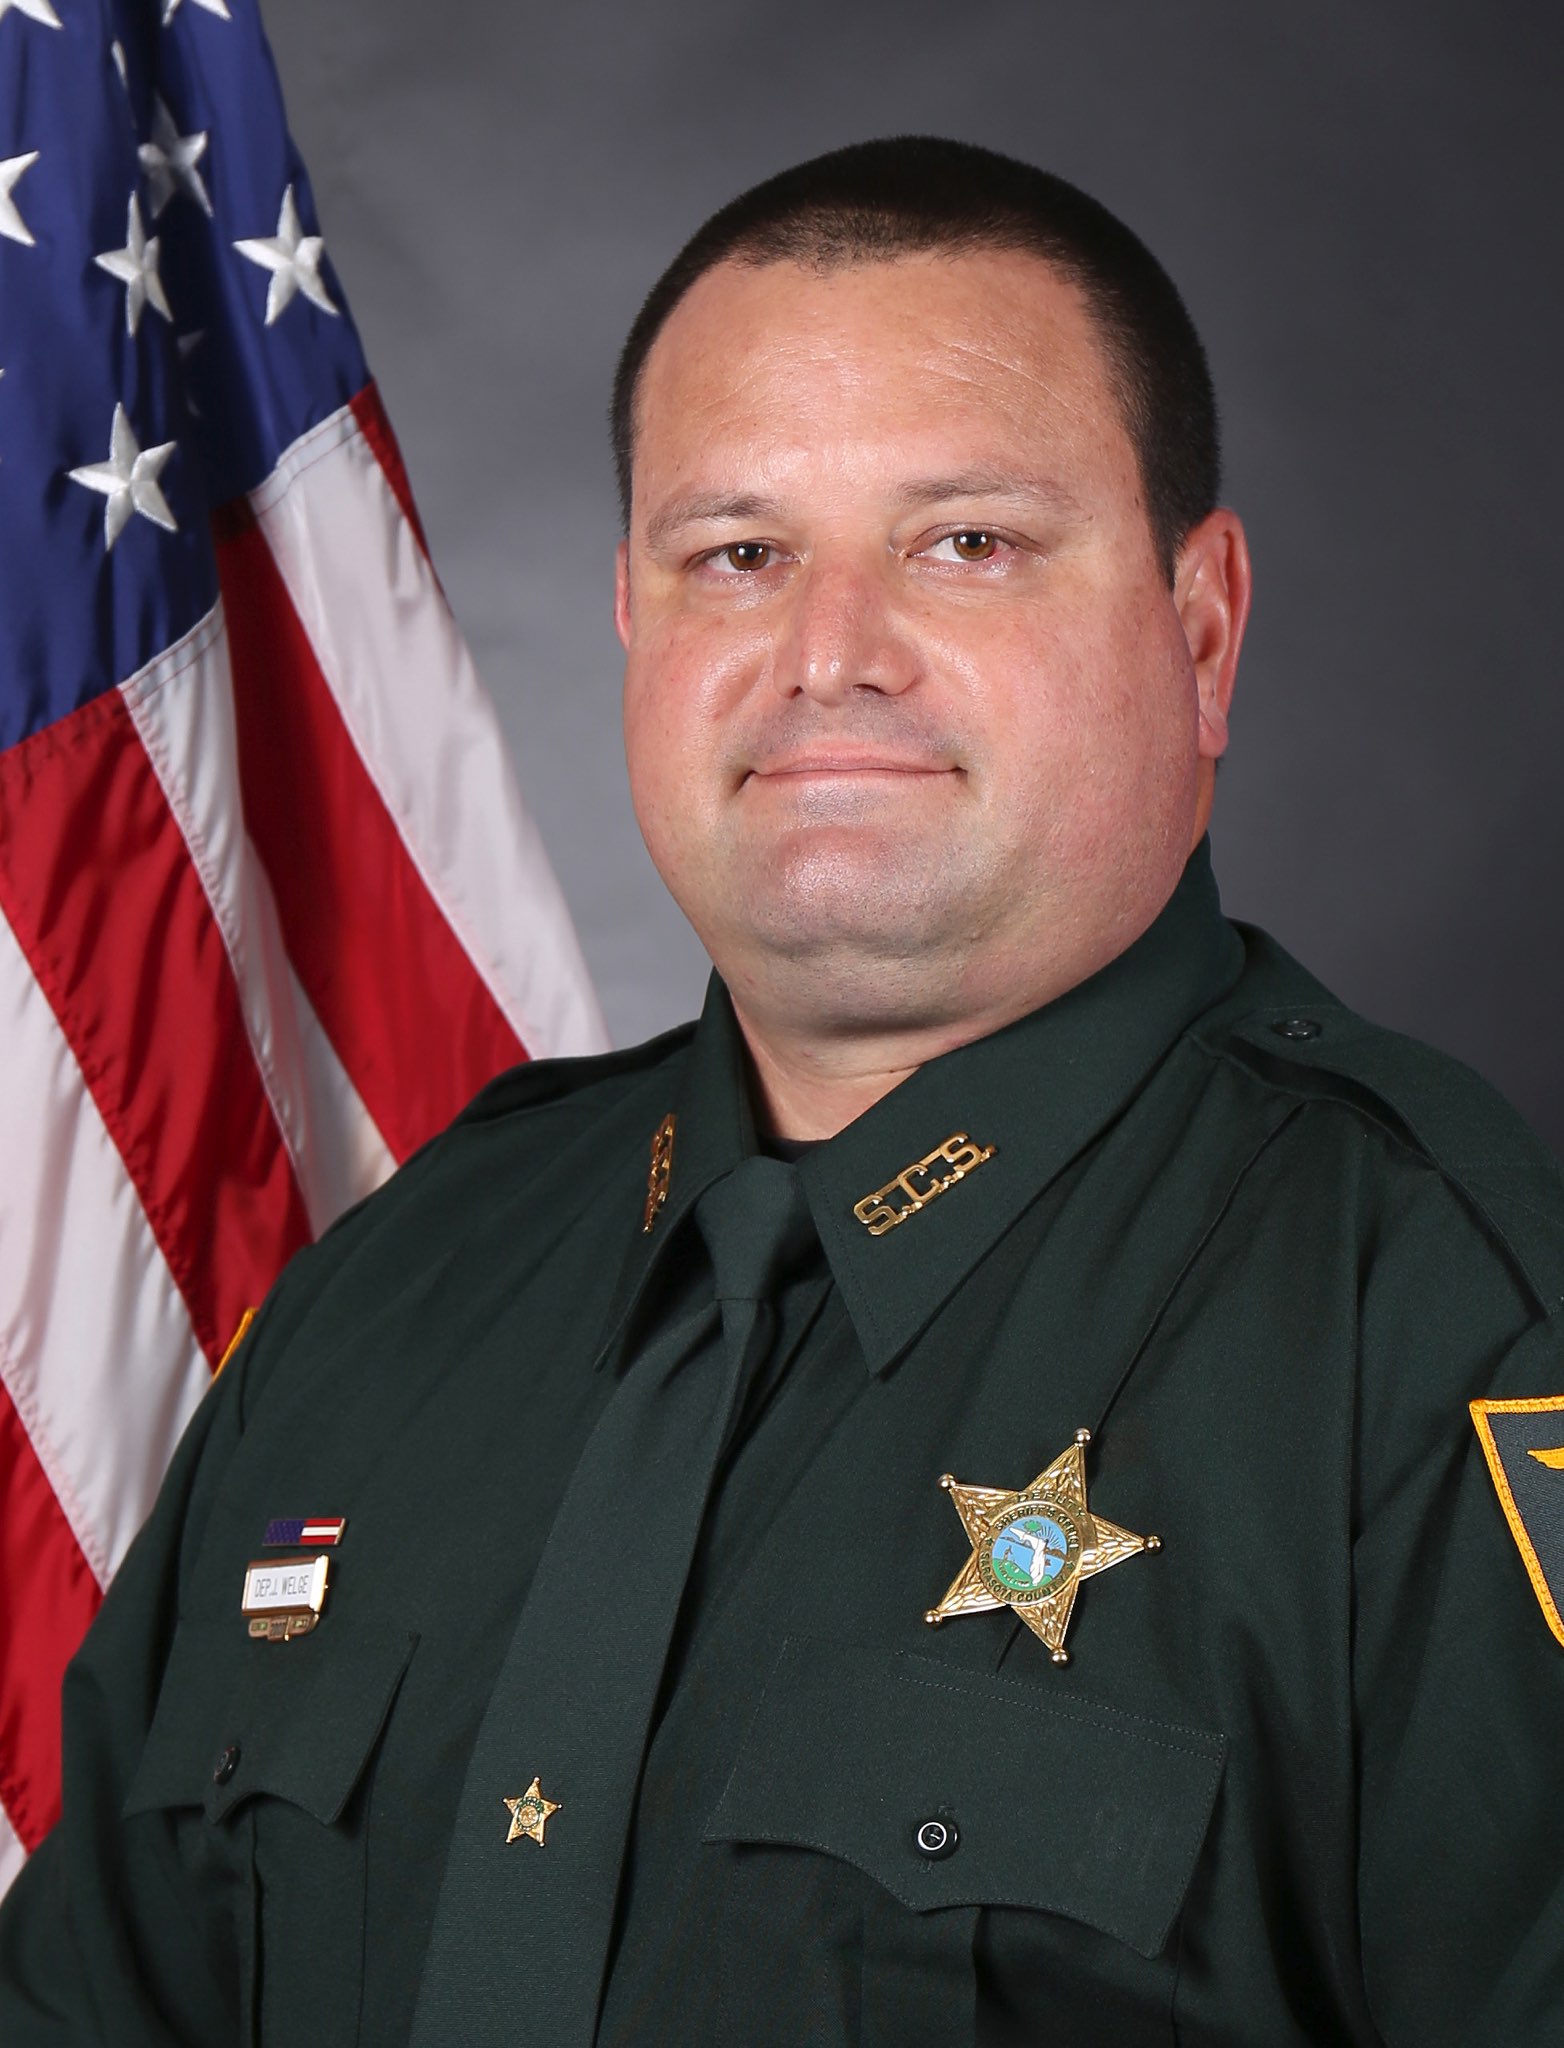 Deputy Sheriff Joshua Joseph Welge | Sarasota County Sheriff's Office, Florida